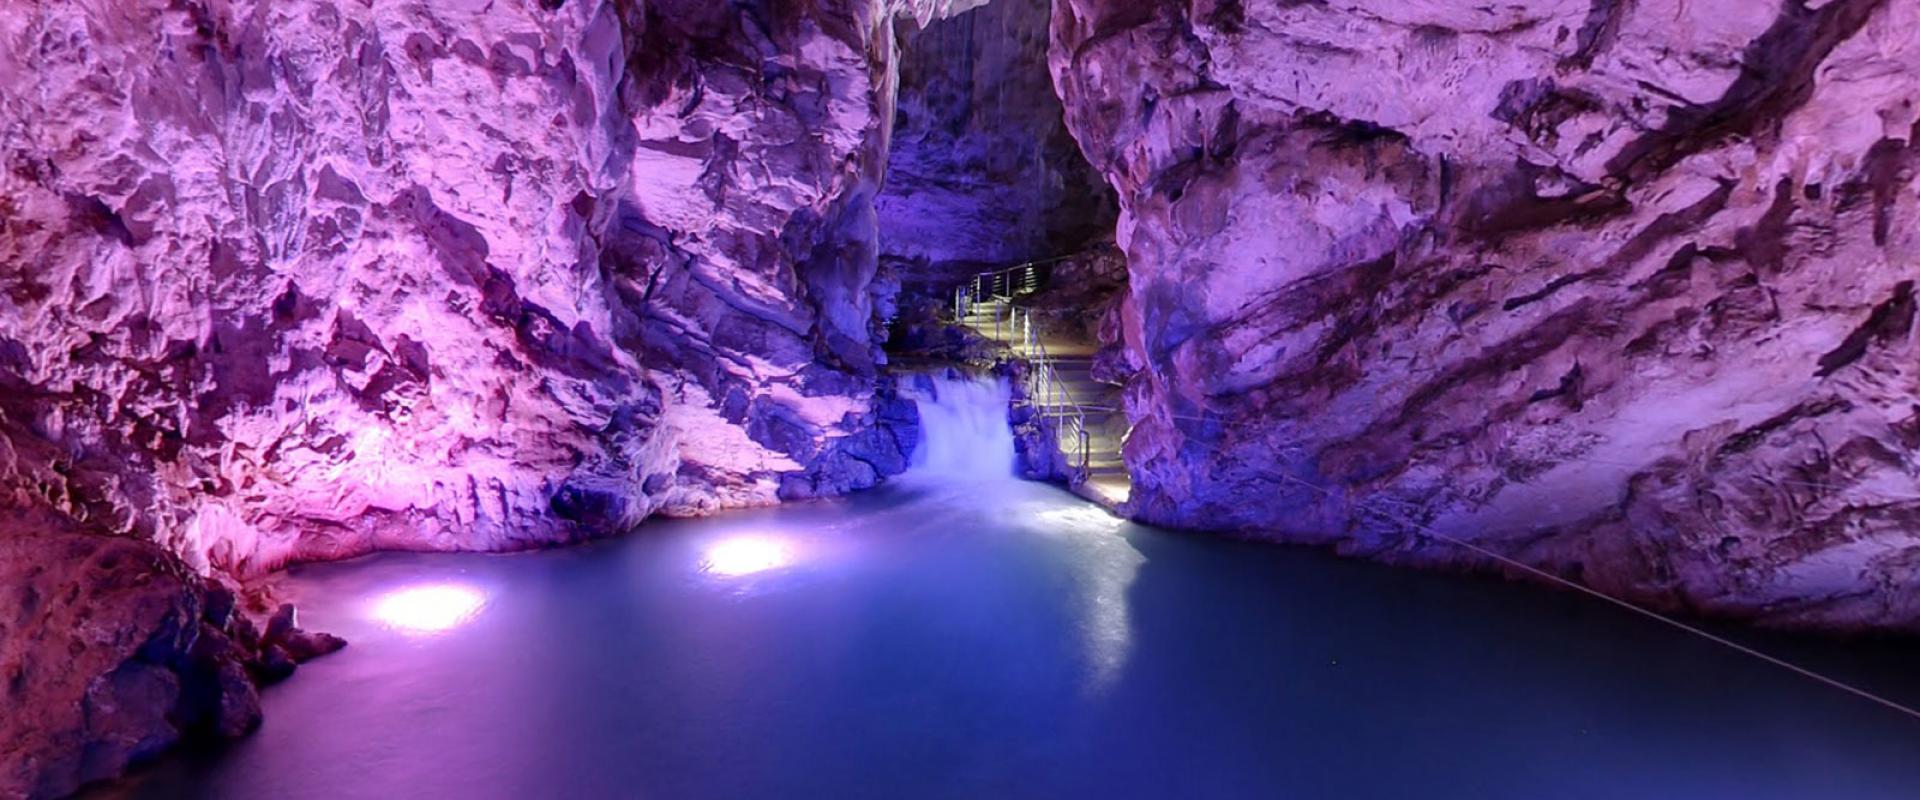 Visit the Pertosa caves